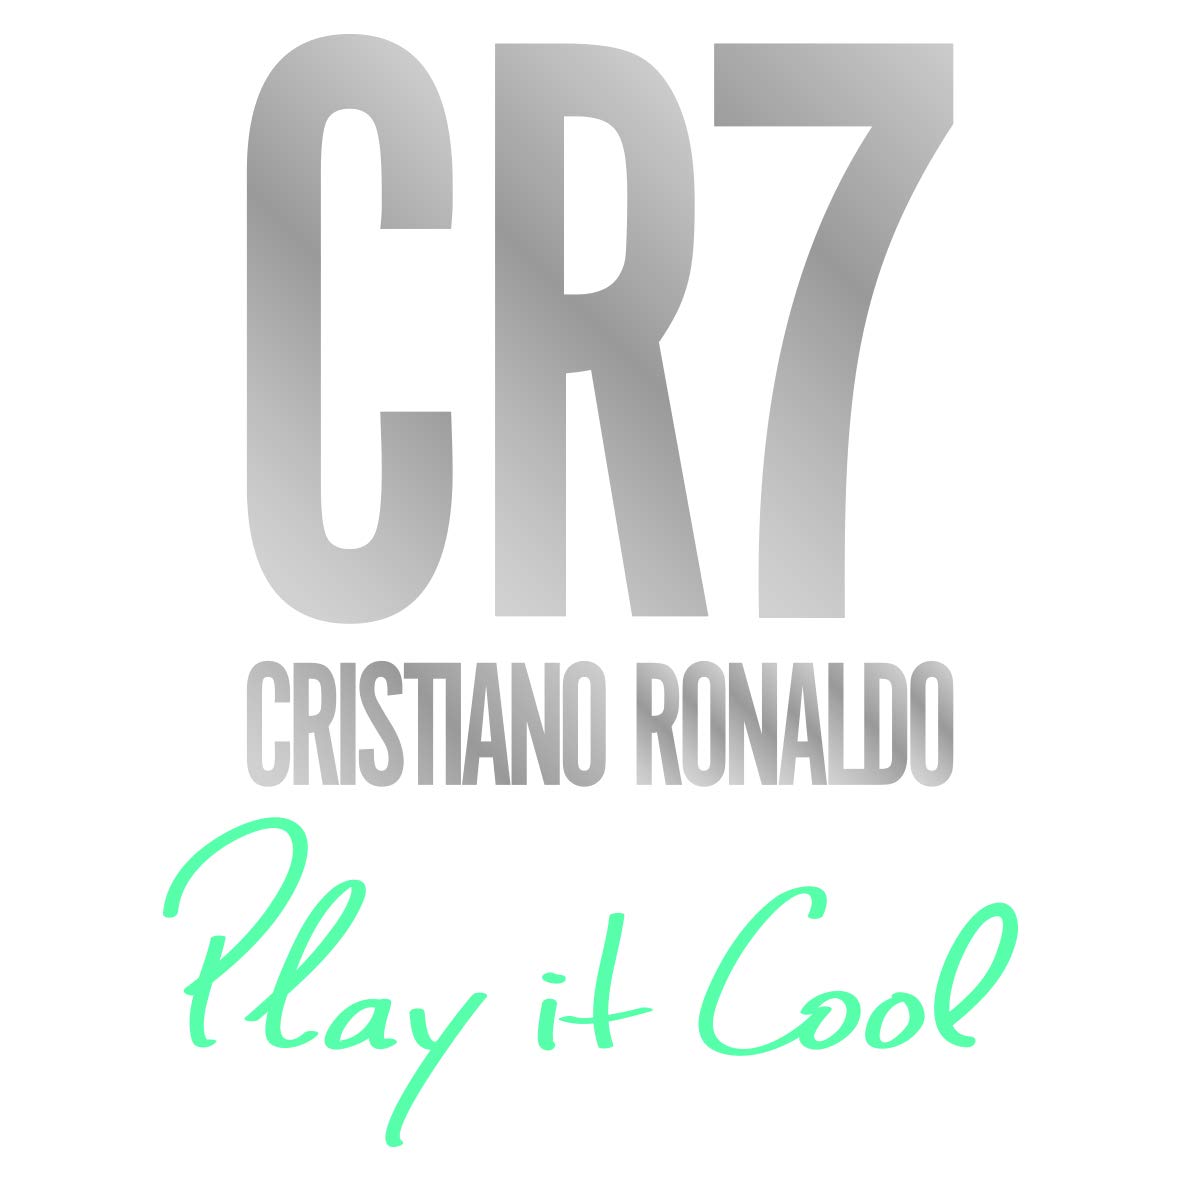 CR7 Play It Cool Cristiano Ronaldo - Light, Fresh Body Spray Scent for Men - With Mandarin, Bergamot, Lavender, and Musk - From Cristiano Ronaldo's Original Men's Fragrance Collection - 5.1 oz